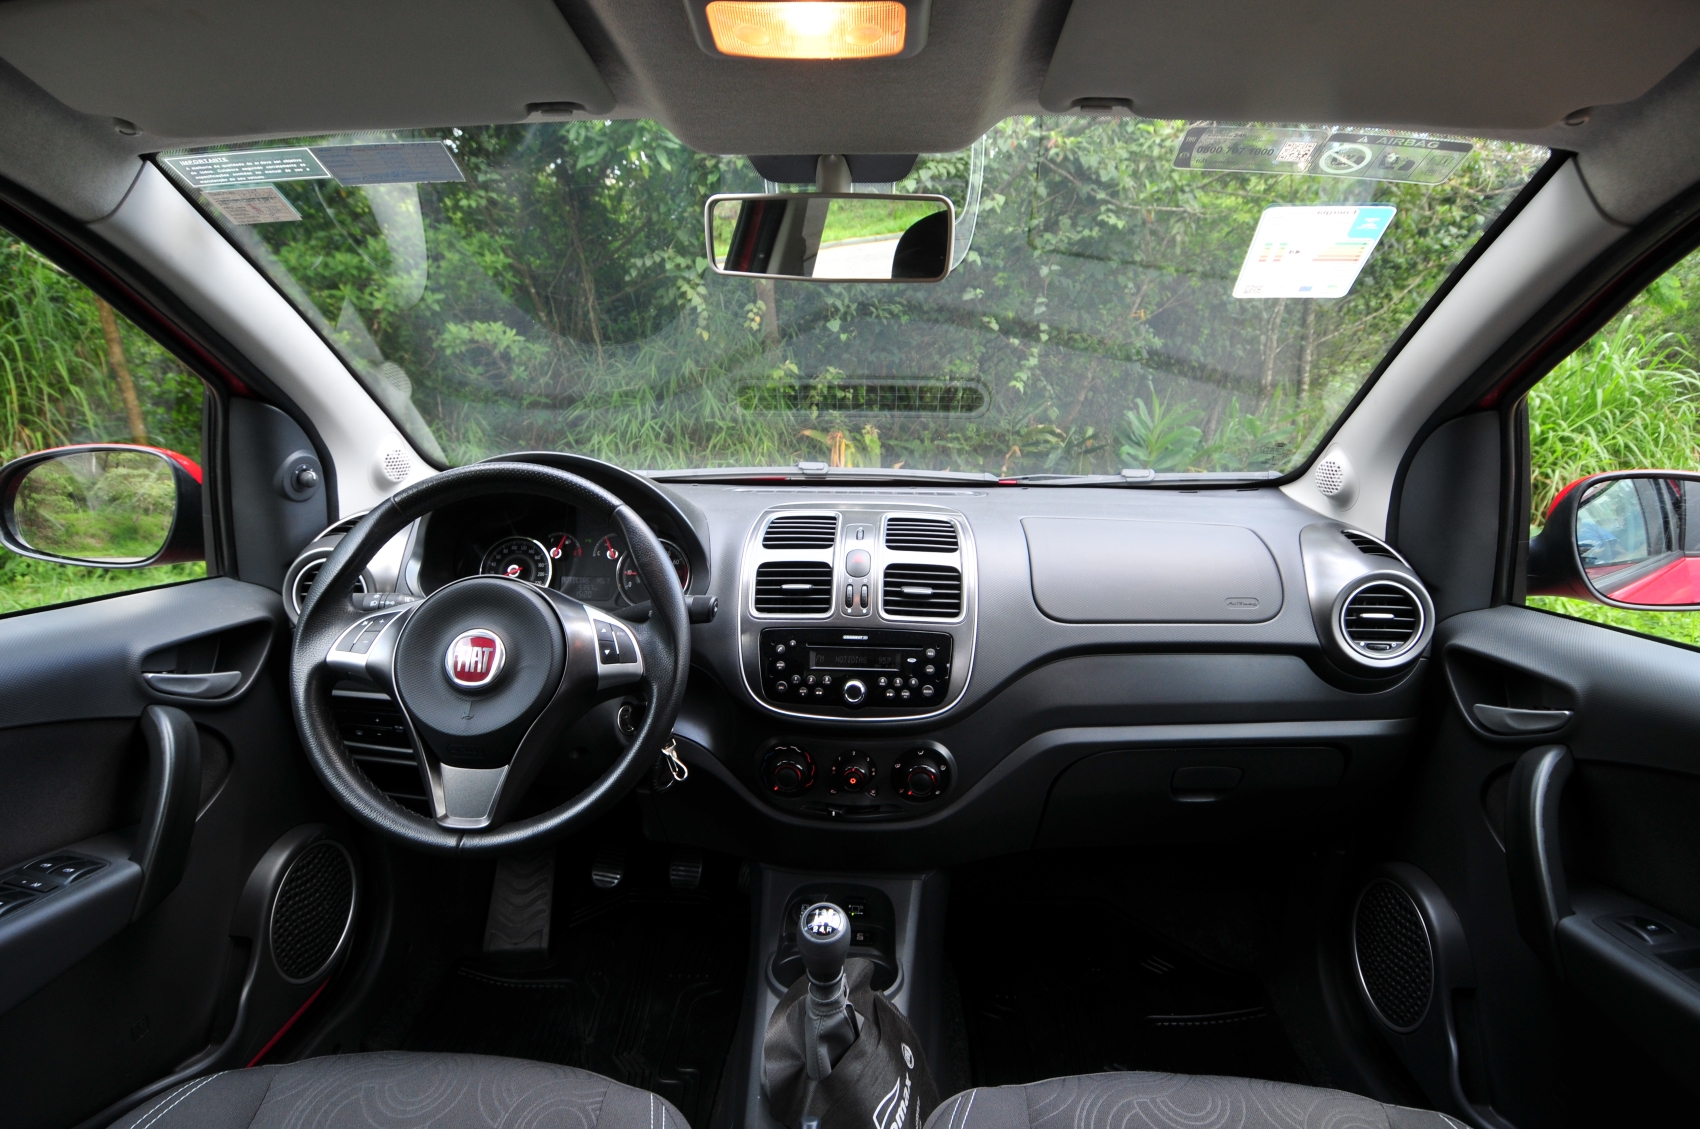 Fiat Grand Siena modelo 2020 com kit GNV vermelho interior painel